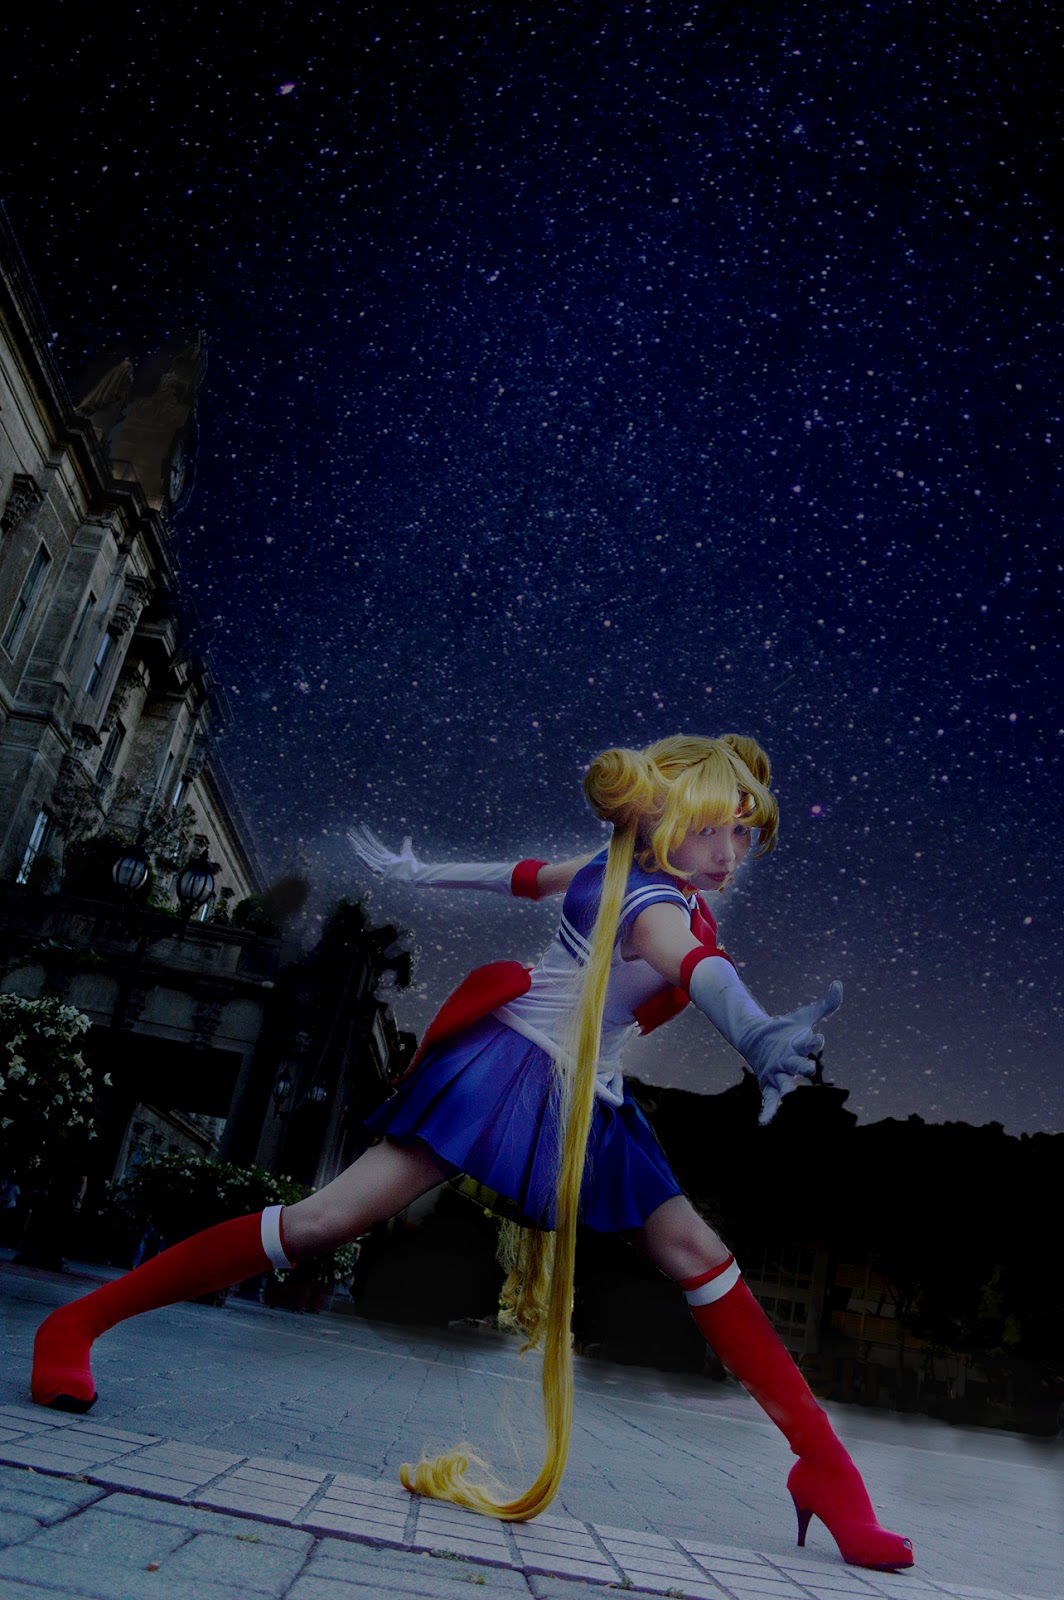 Sailormoon Photoshoot at UST | ReshaDollyPrincess